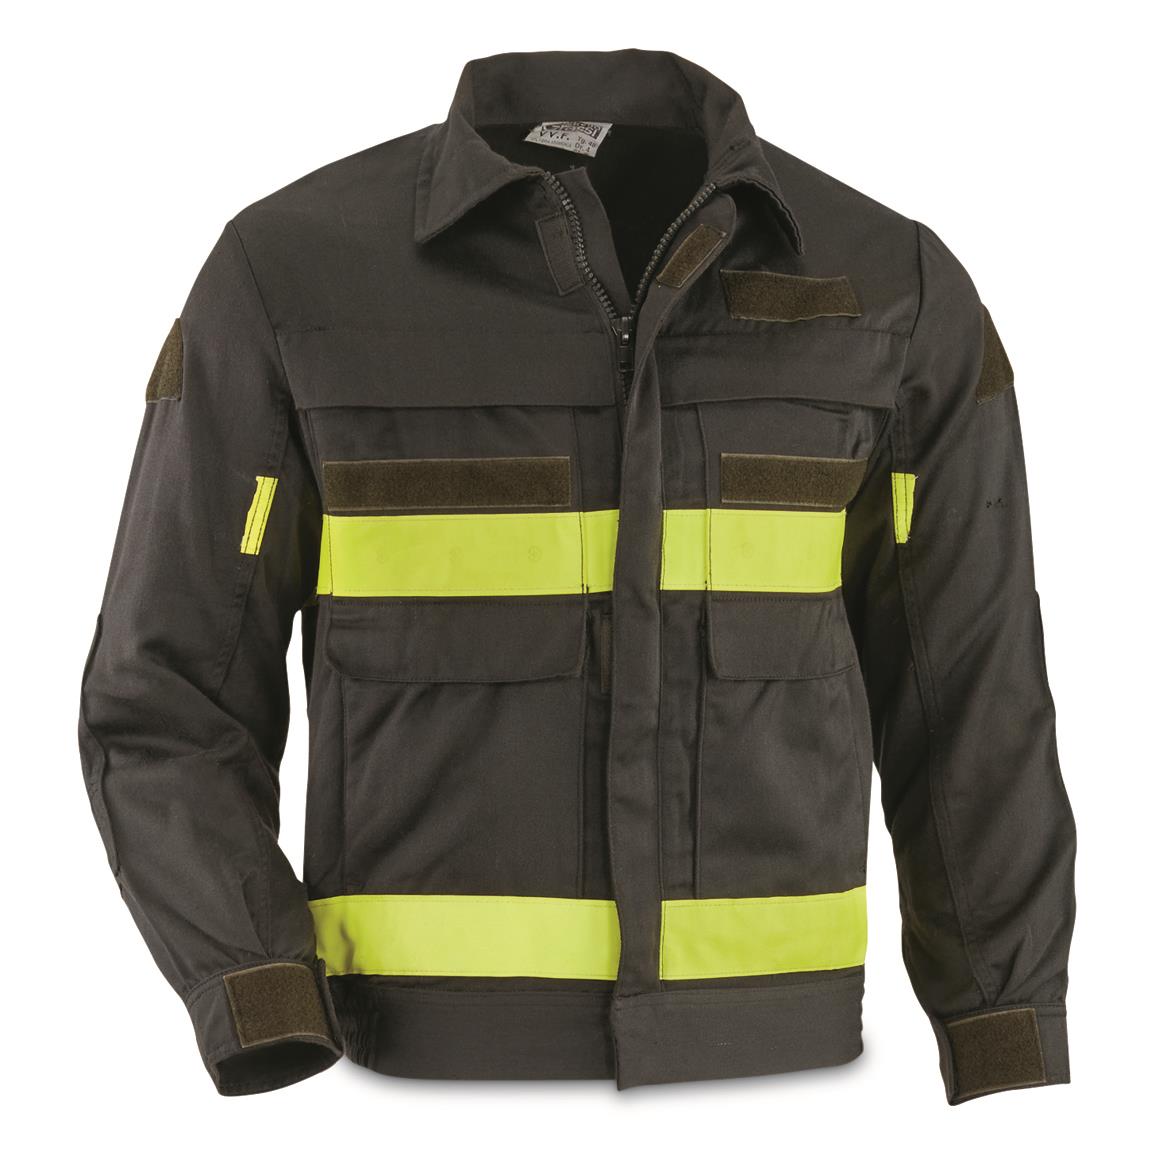 Italian Fire Service Surplus Aramid Firefighters Shirt Jacket, Like New, Black